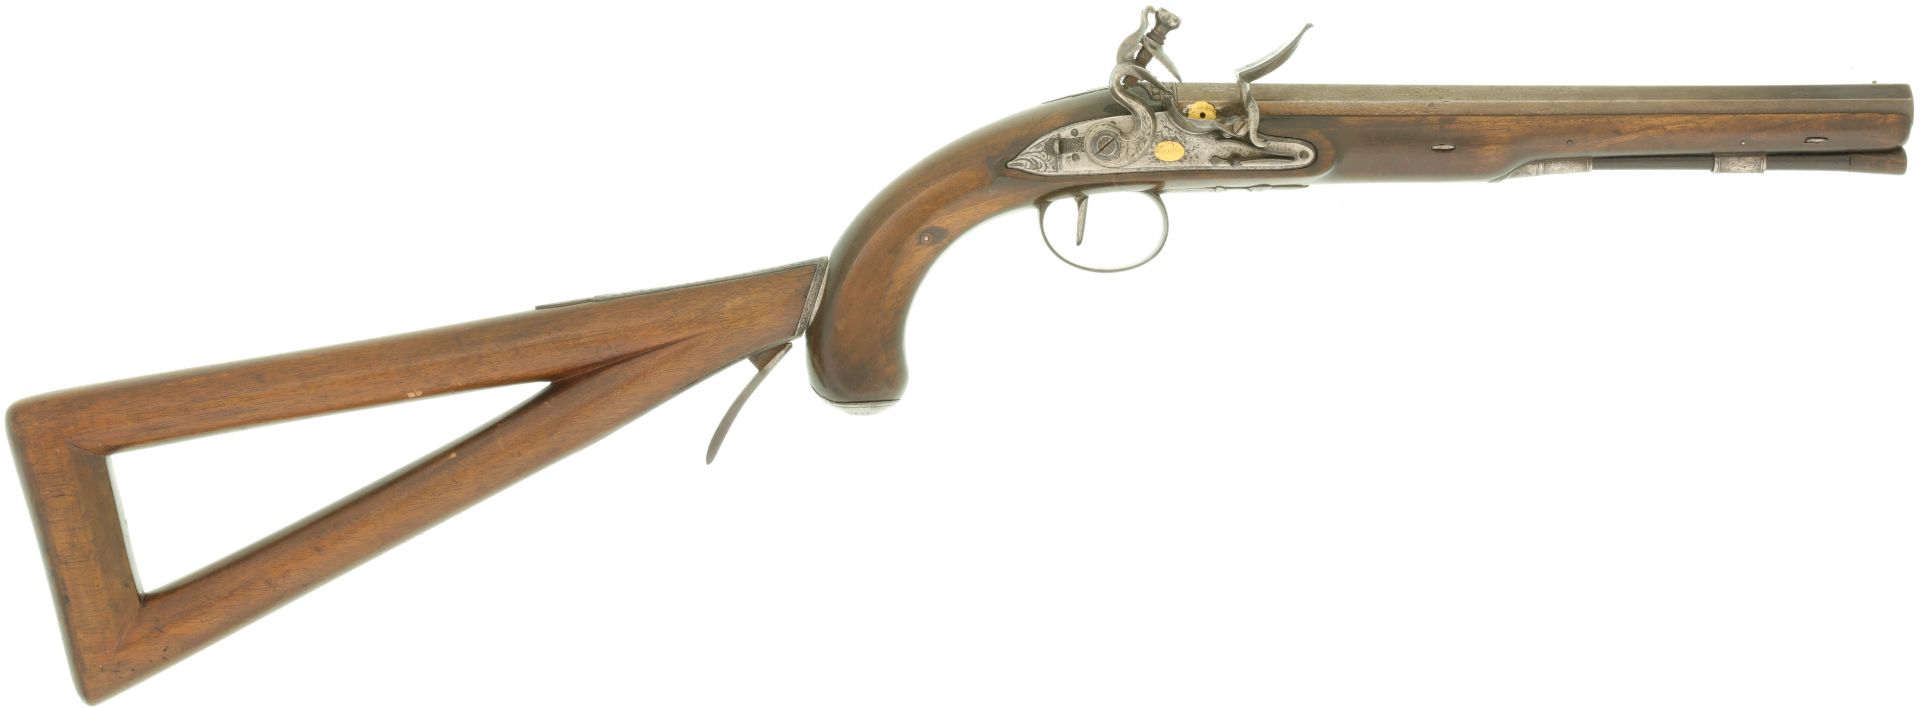 Steinschloss-Jagdpistole mit abnehmbarem Kolben, Wogdon London, Kal. 13mm - Image 6 of 9